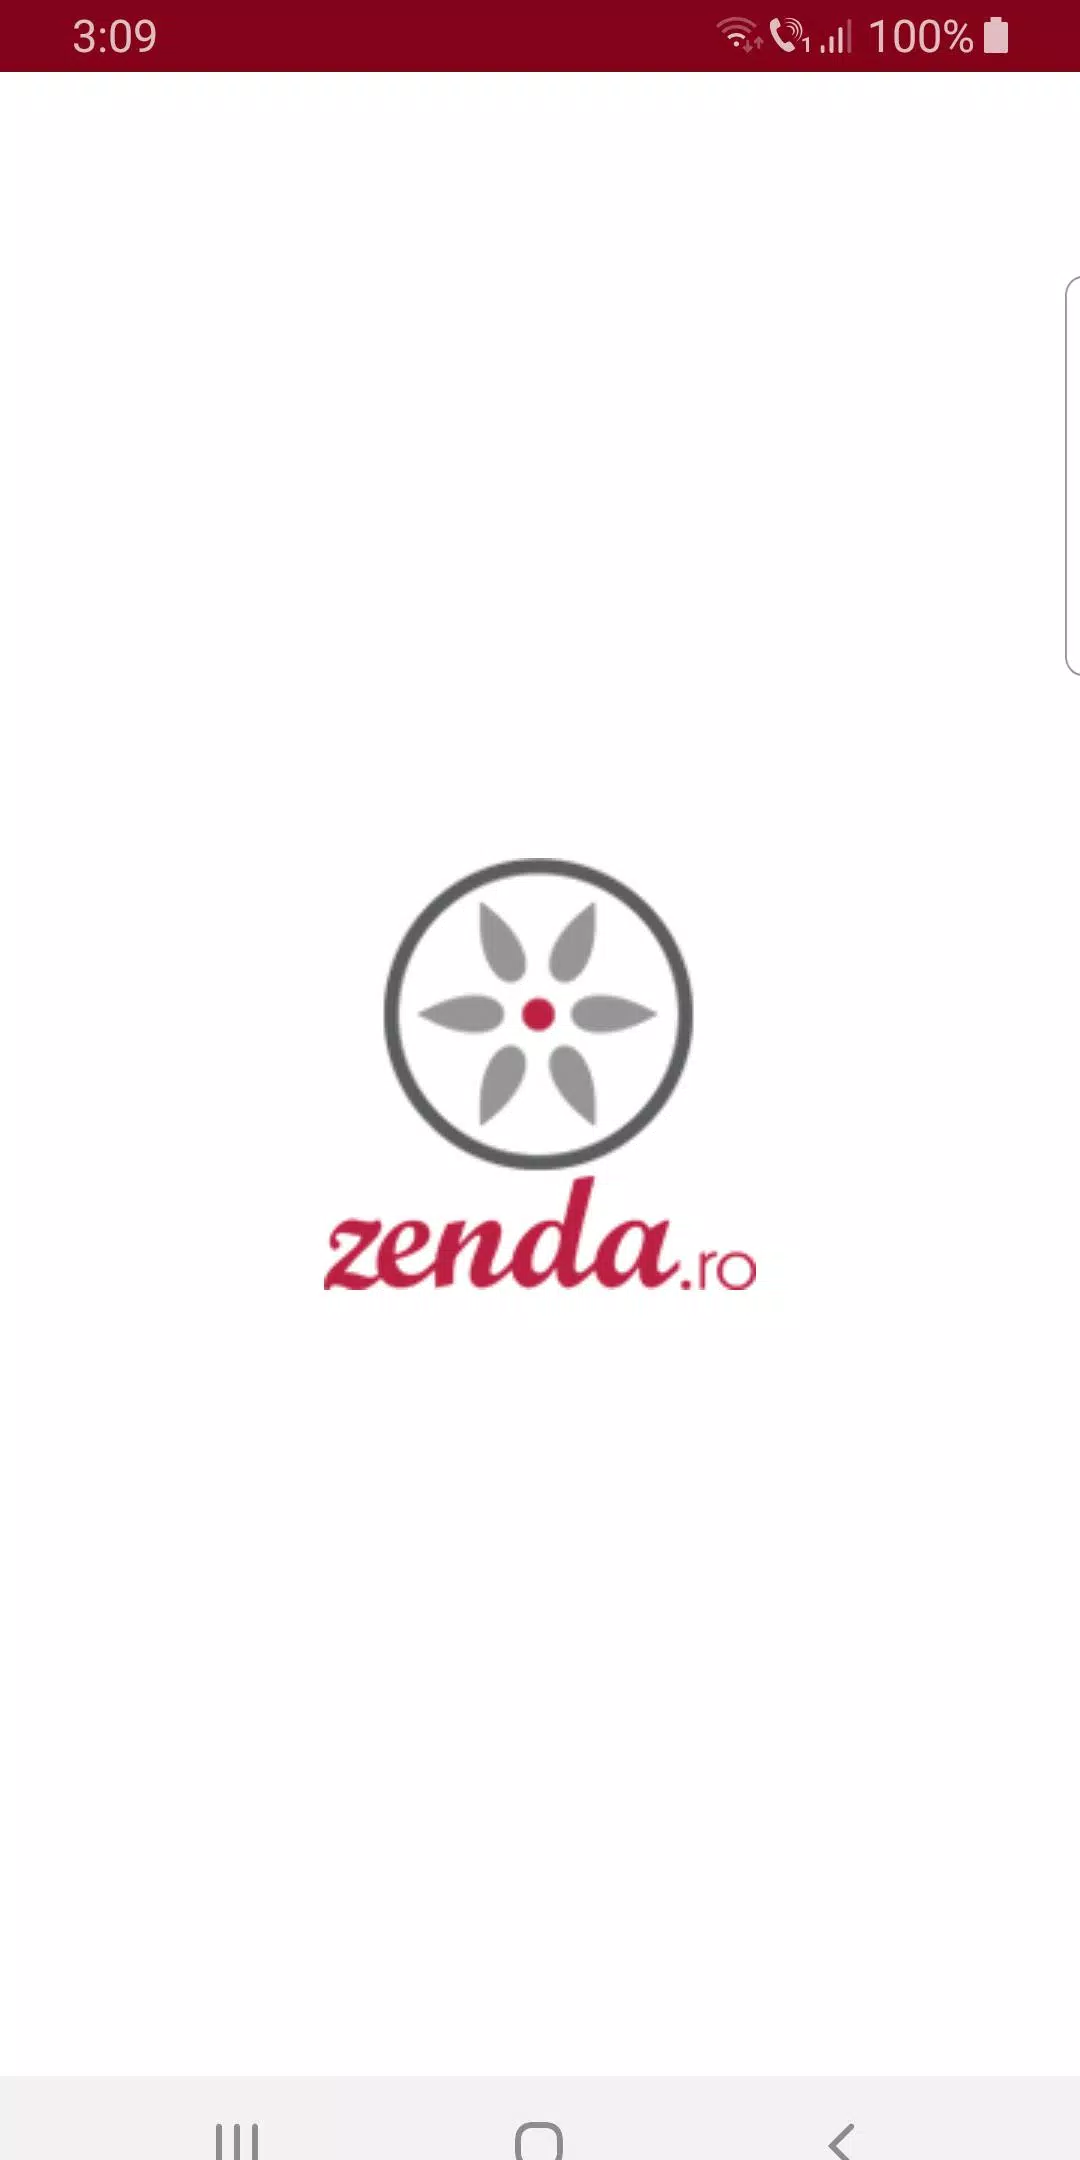 Zenda.ro APK for Android Download